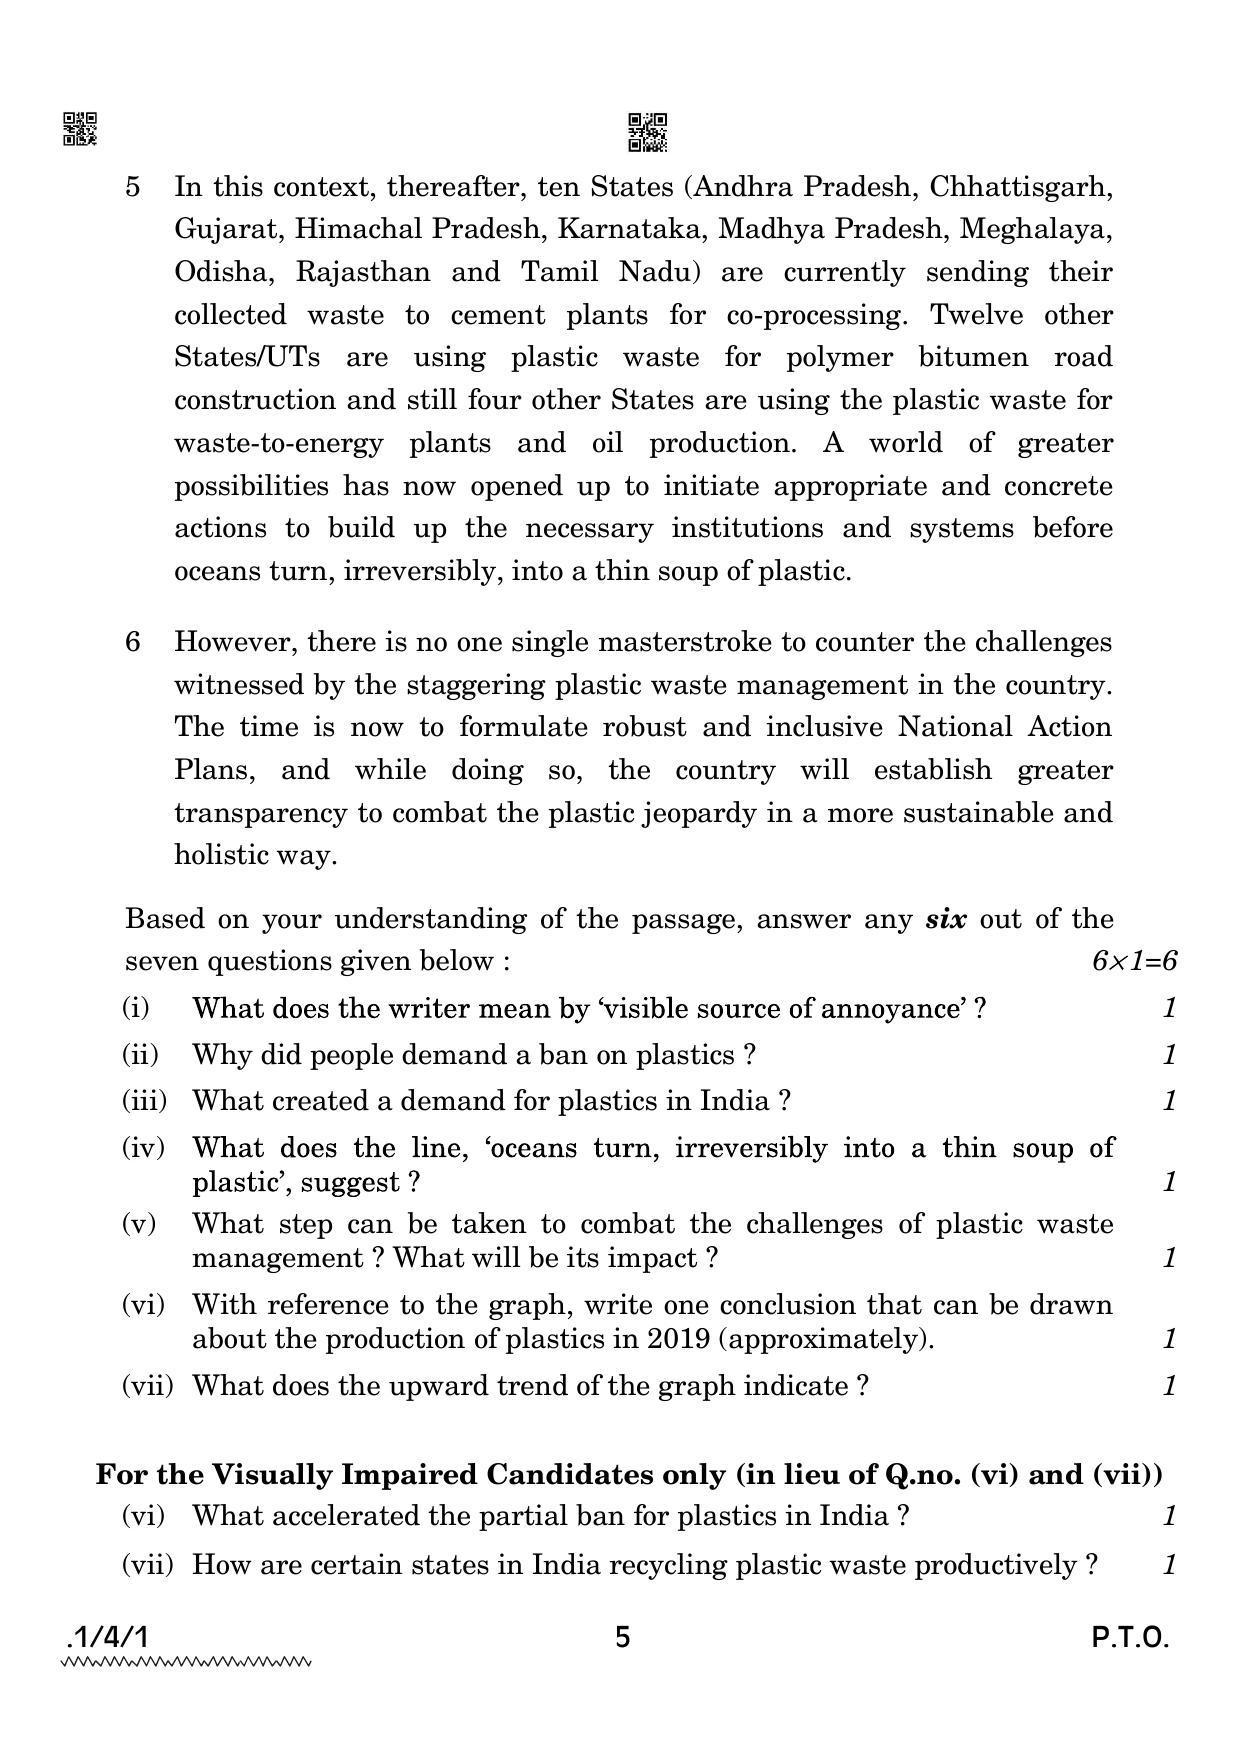 CBSE Class 12 1-4-1 English Core 2022 Question Paper - Page 5